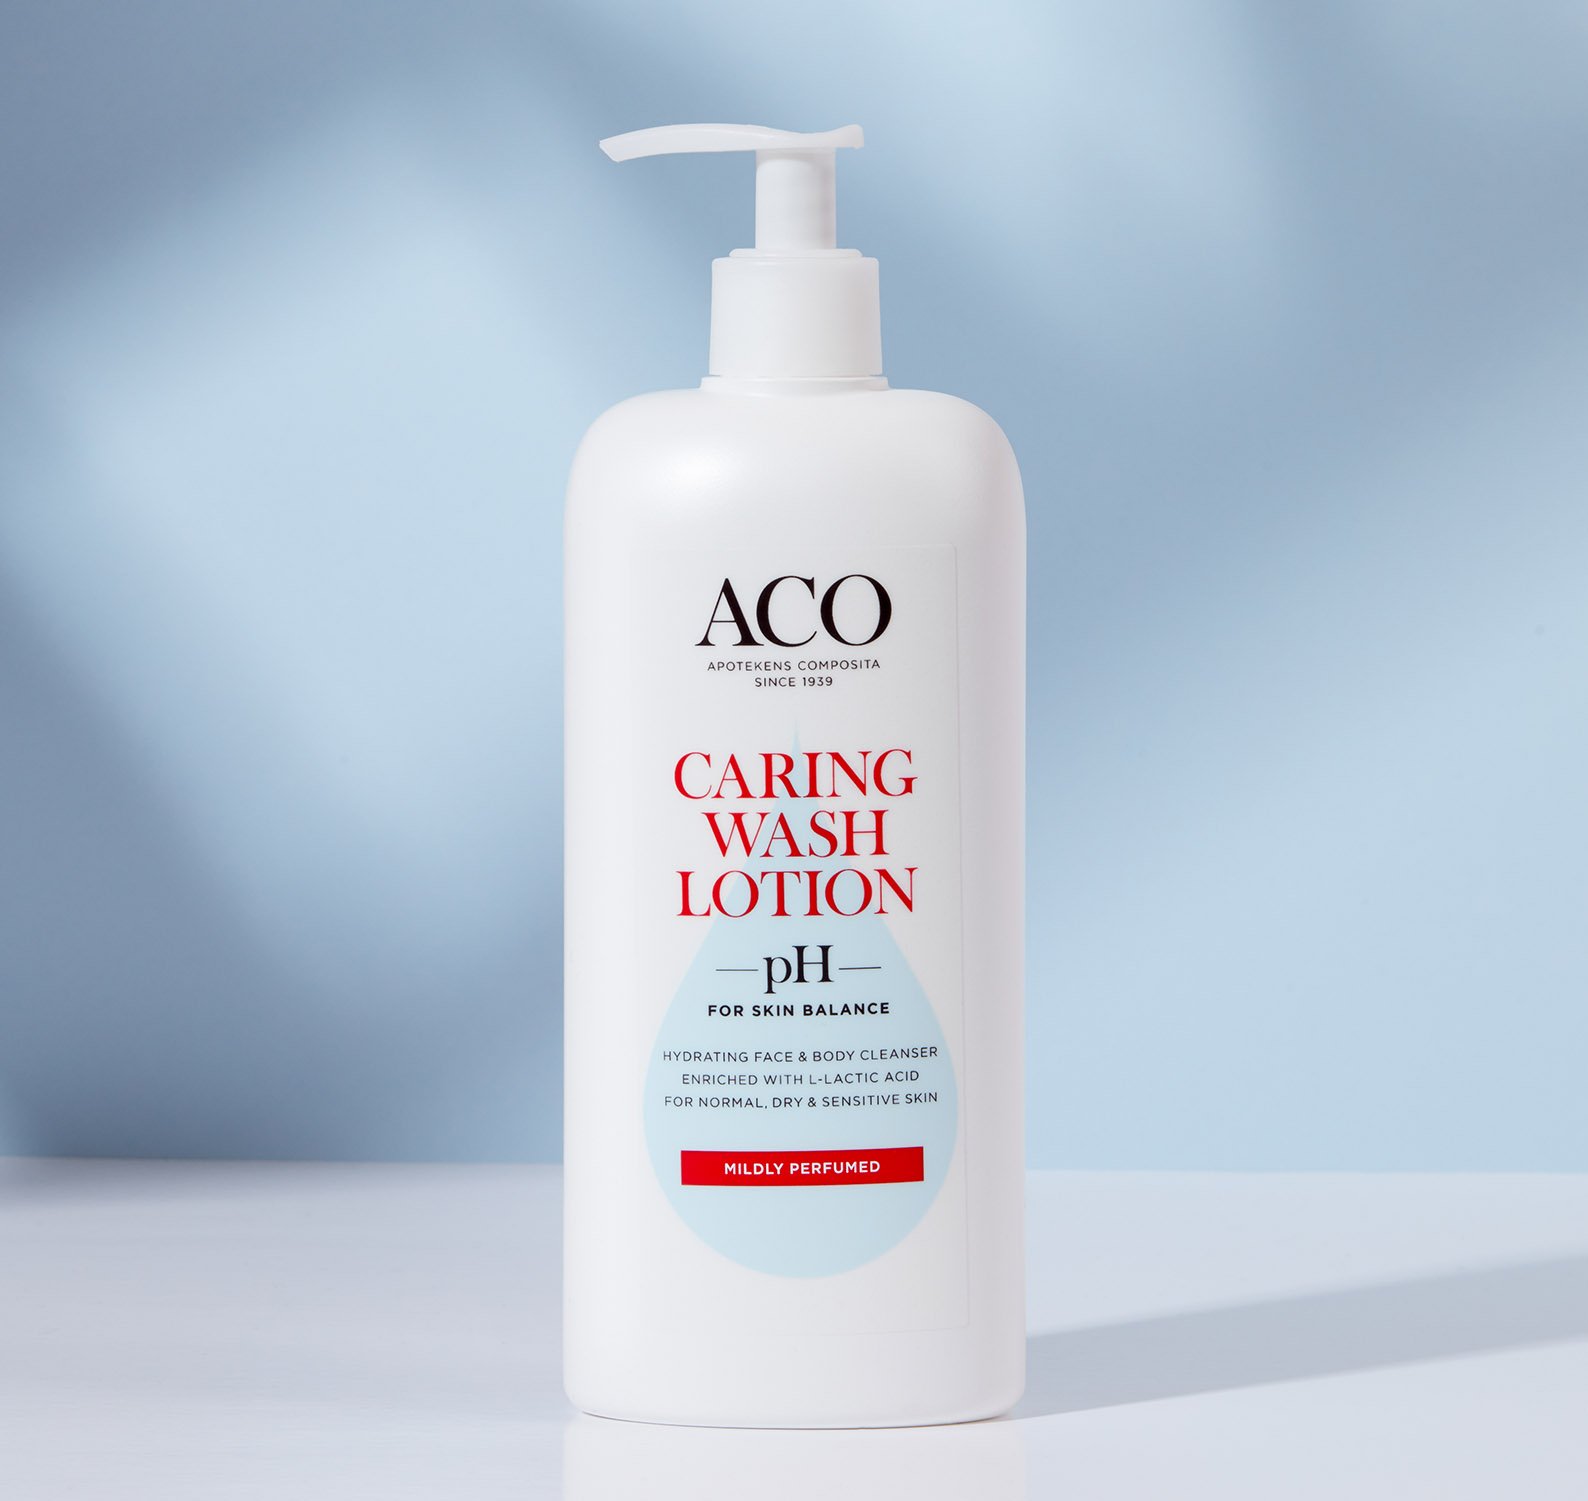 ACO Caring Wash Lotion 400 ml